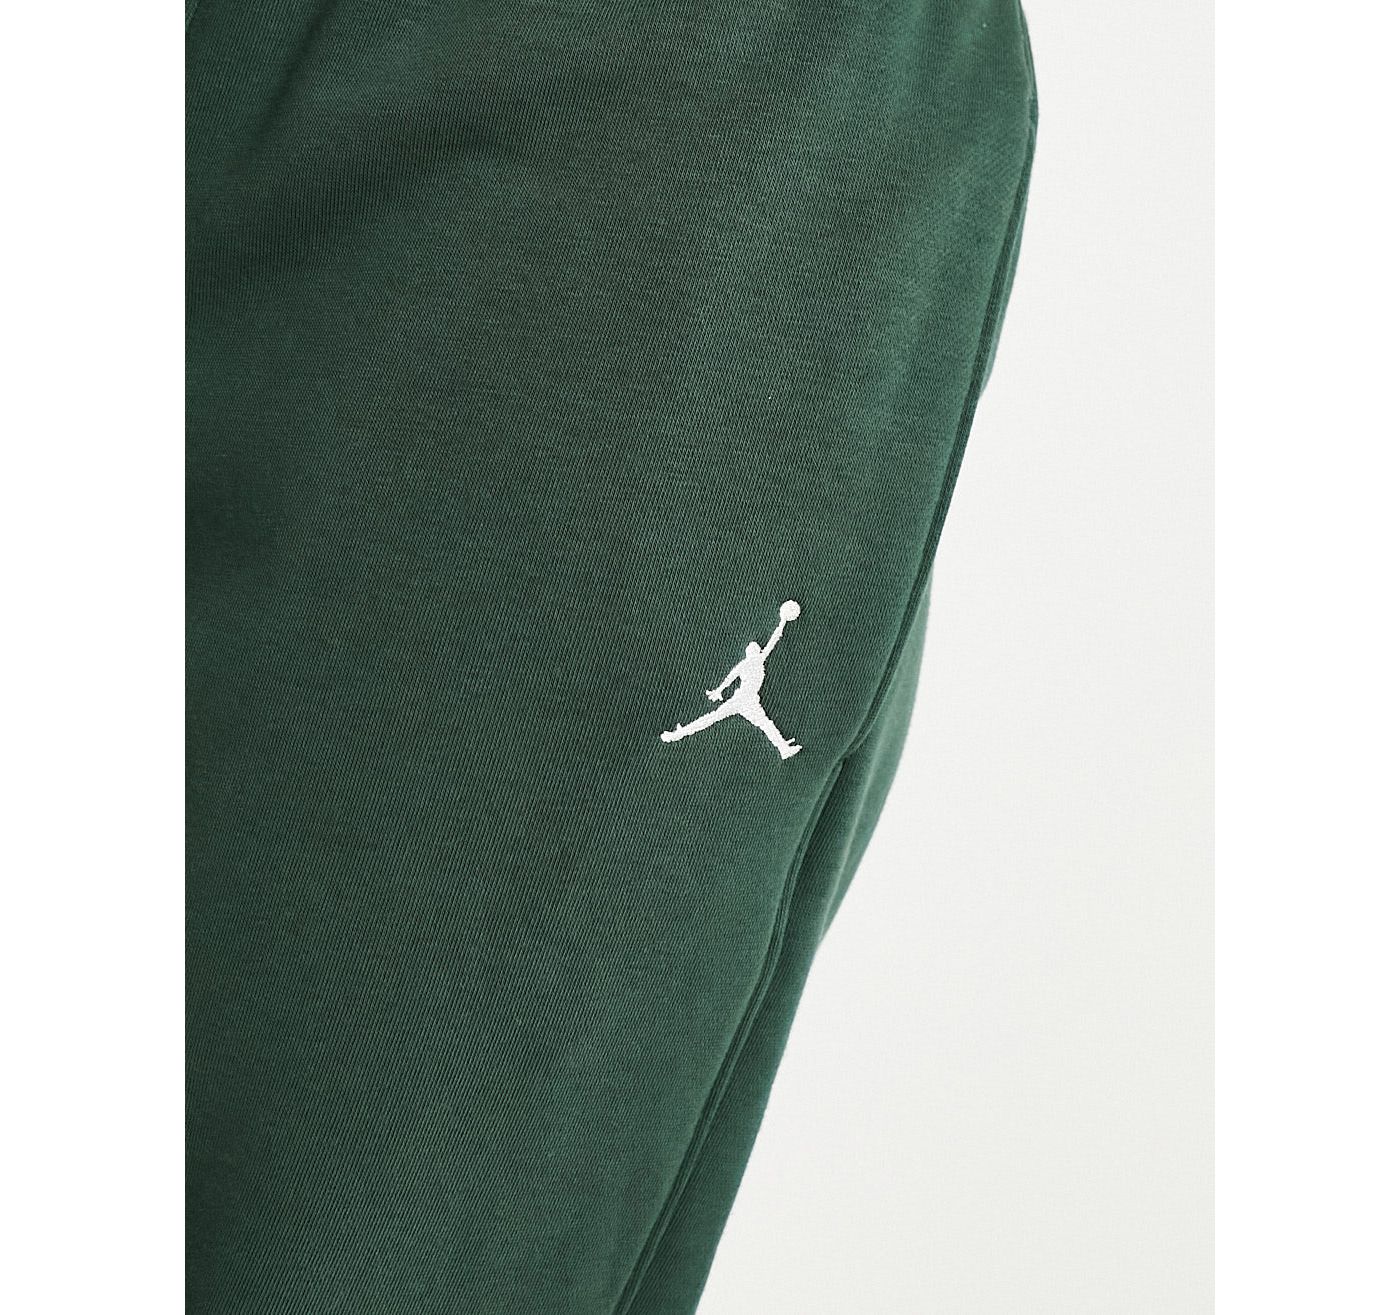 Jordan Brooklyn fleece joggers in jade green